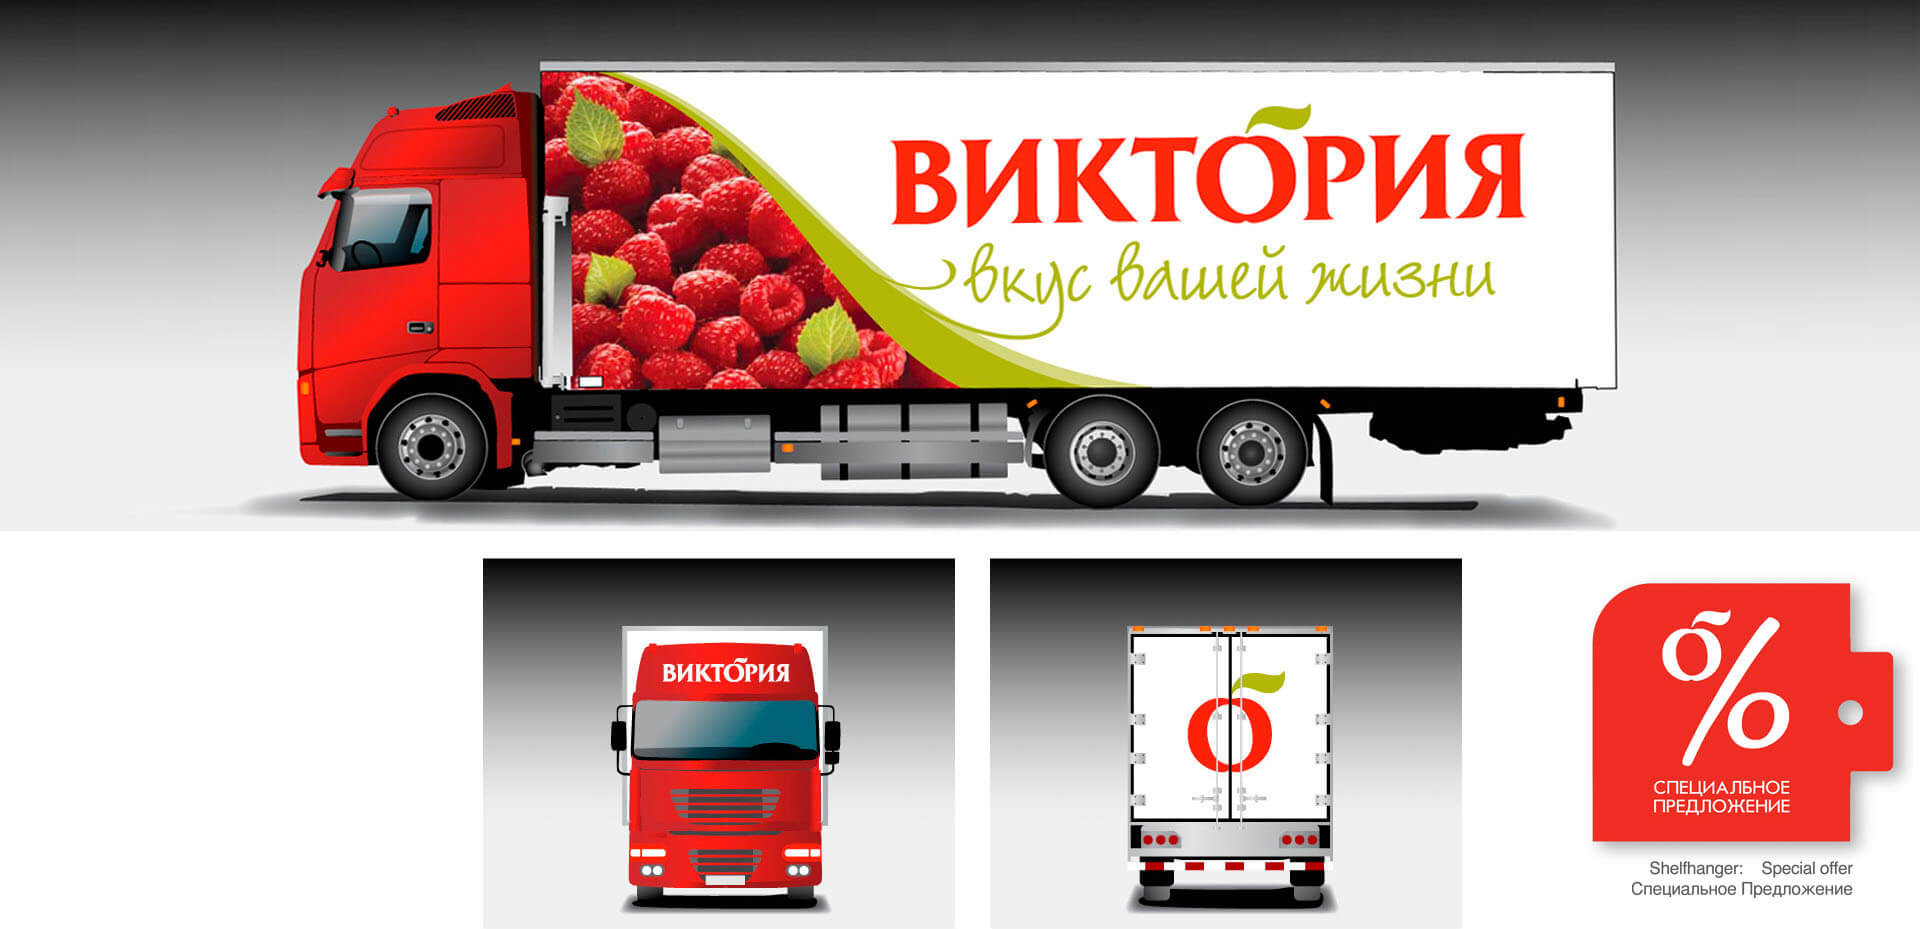 Victoria supermarkets Russian stores branding on trucks